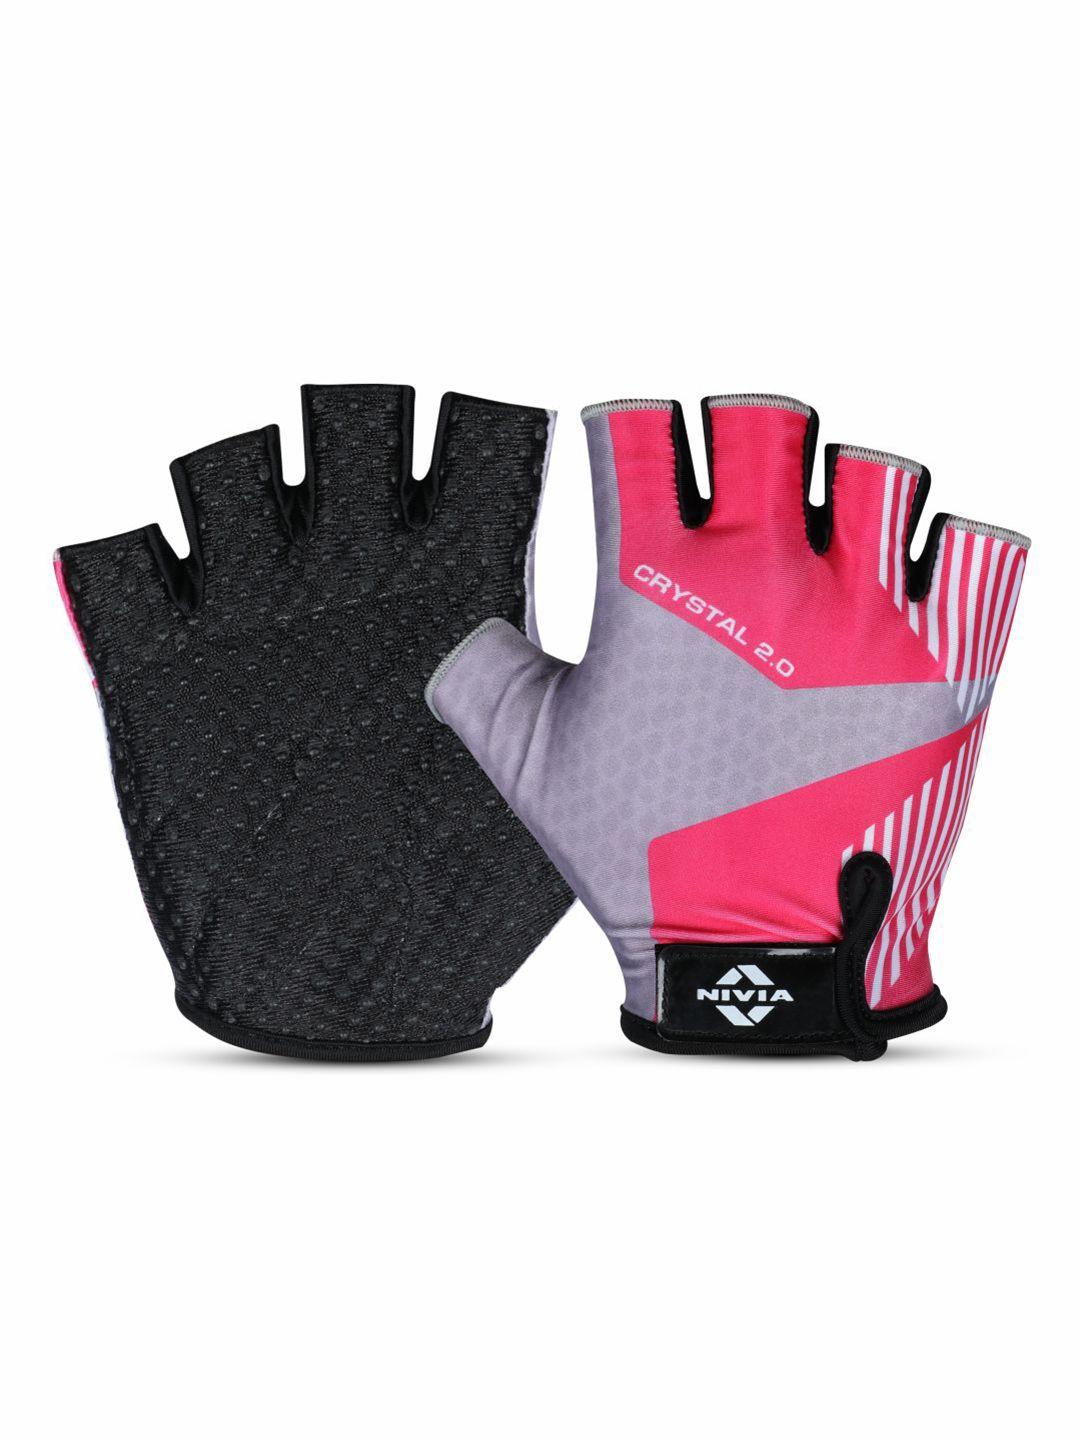 nivia unisex black & pink fitness gloves